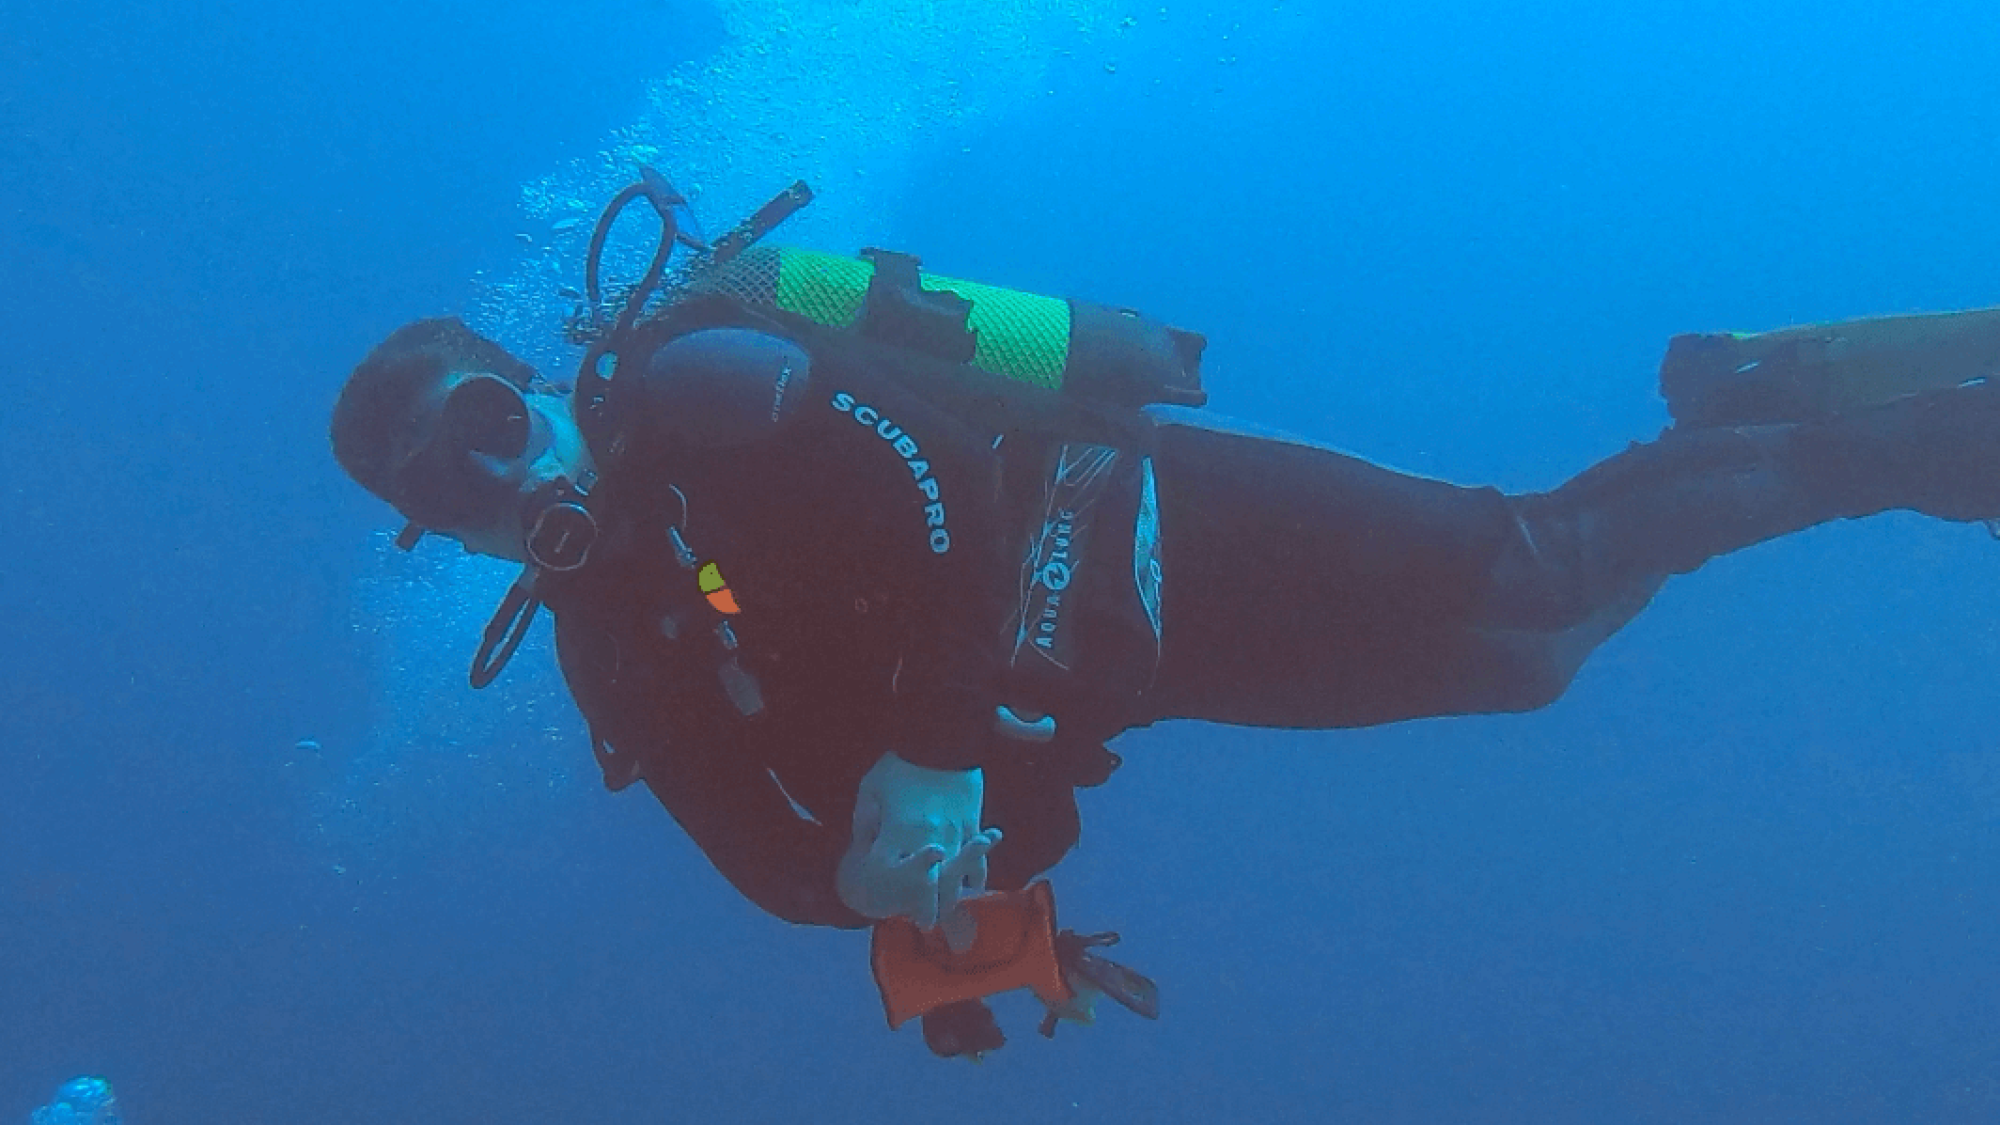 Scuba diver influencer Joe Bilbow diving and posing for the photo